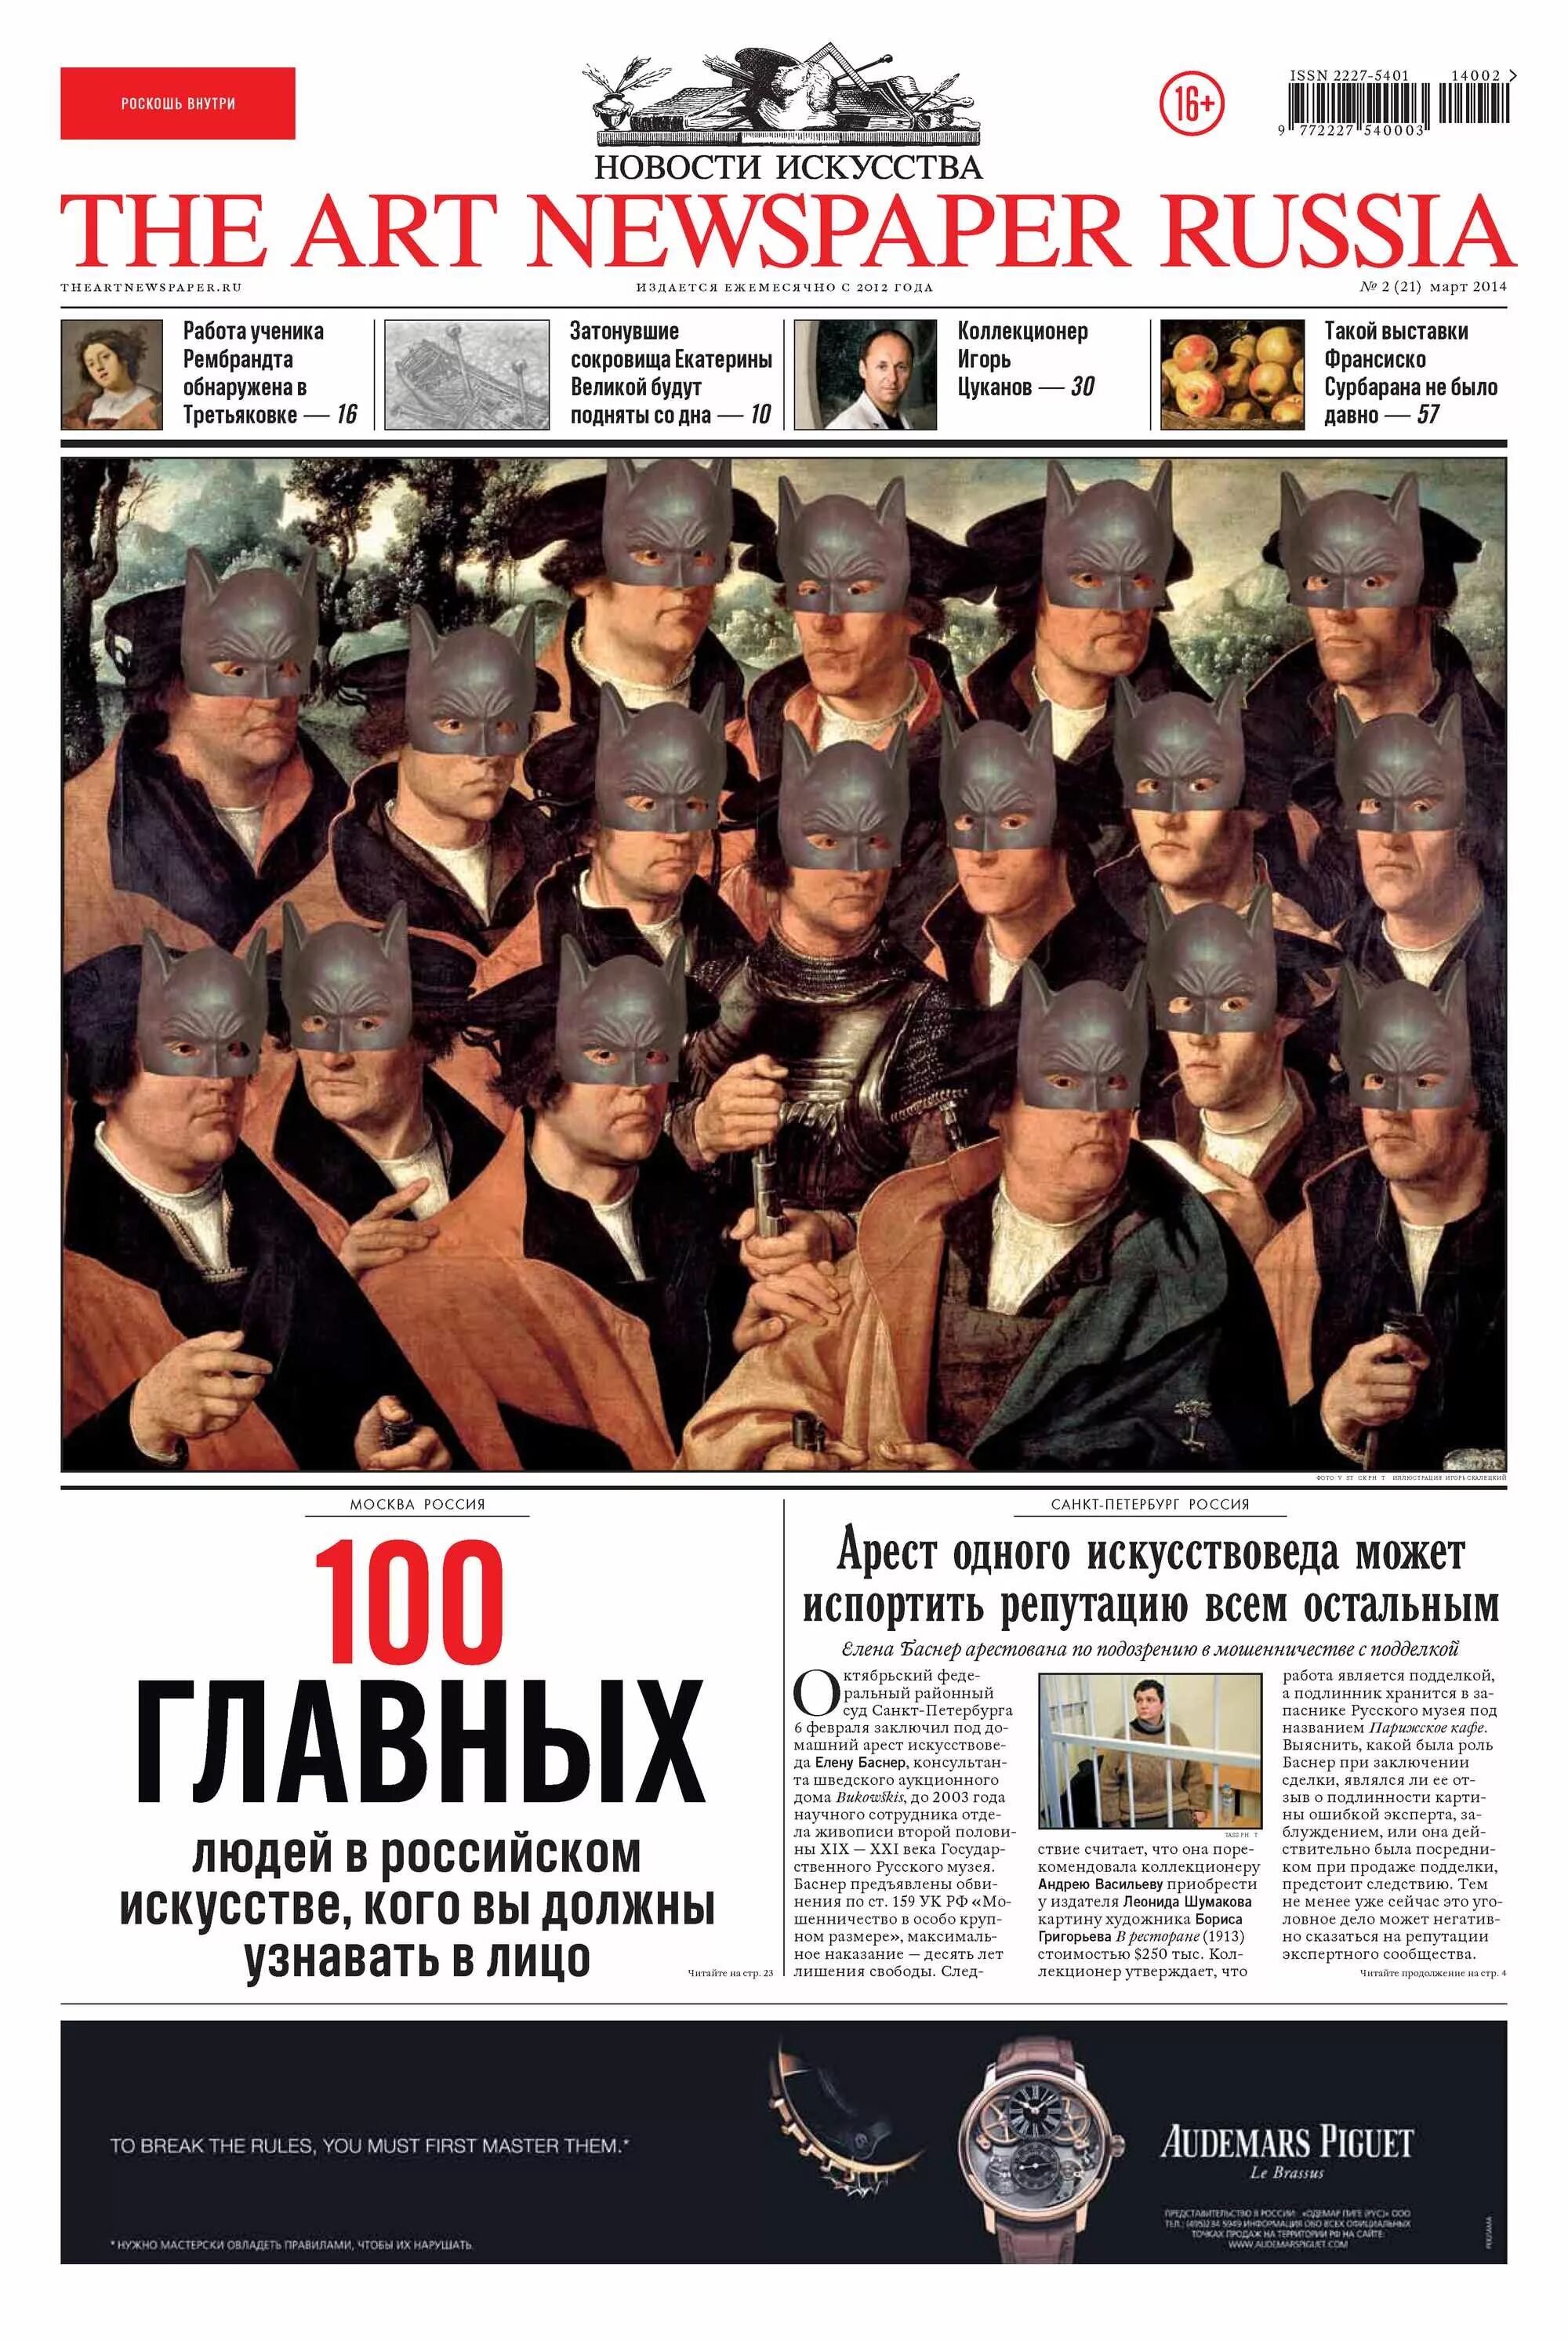 Газета про искусство. The Art newspaper Russia. The Art newspaper Russia журнал. Газета арт.